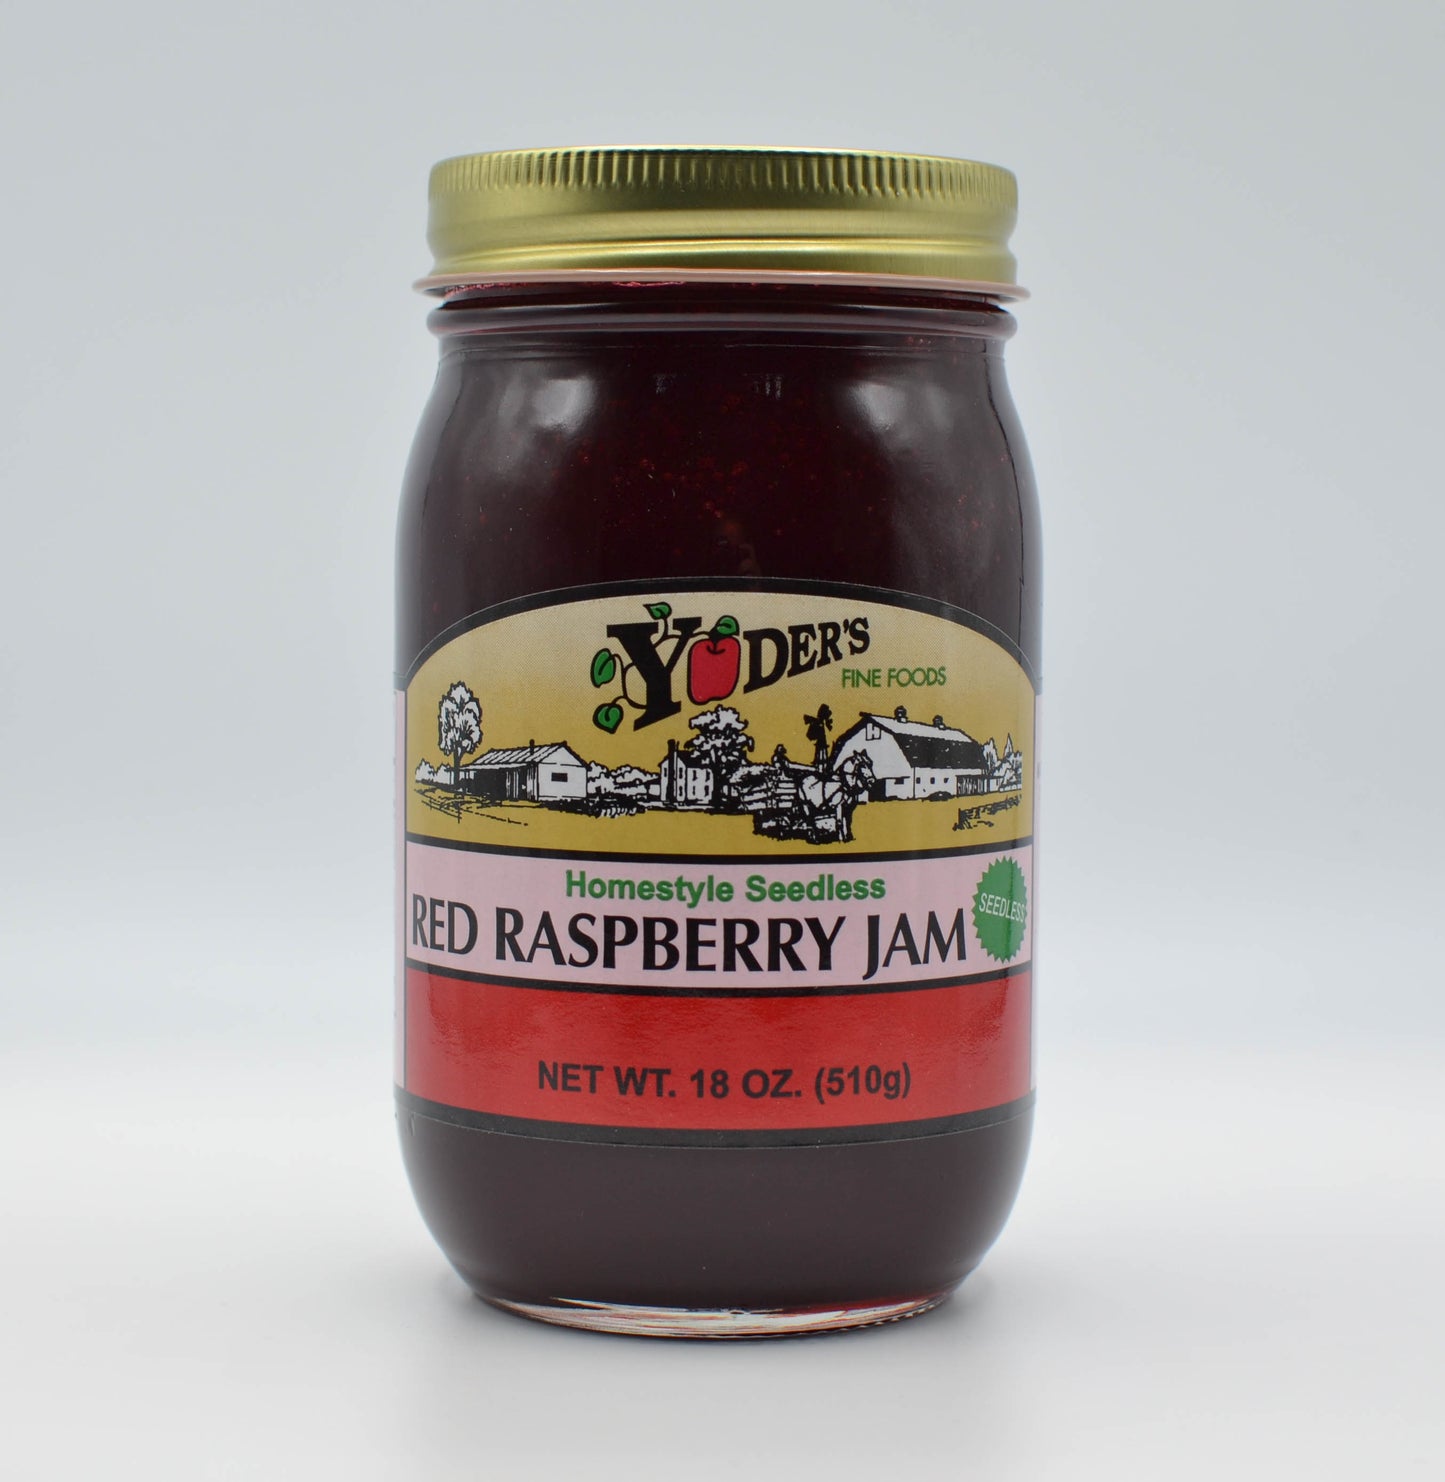 Seedless Red Raspberry Jam